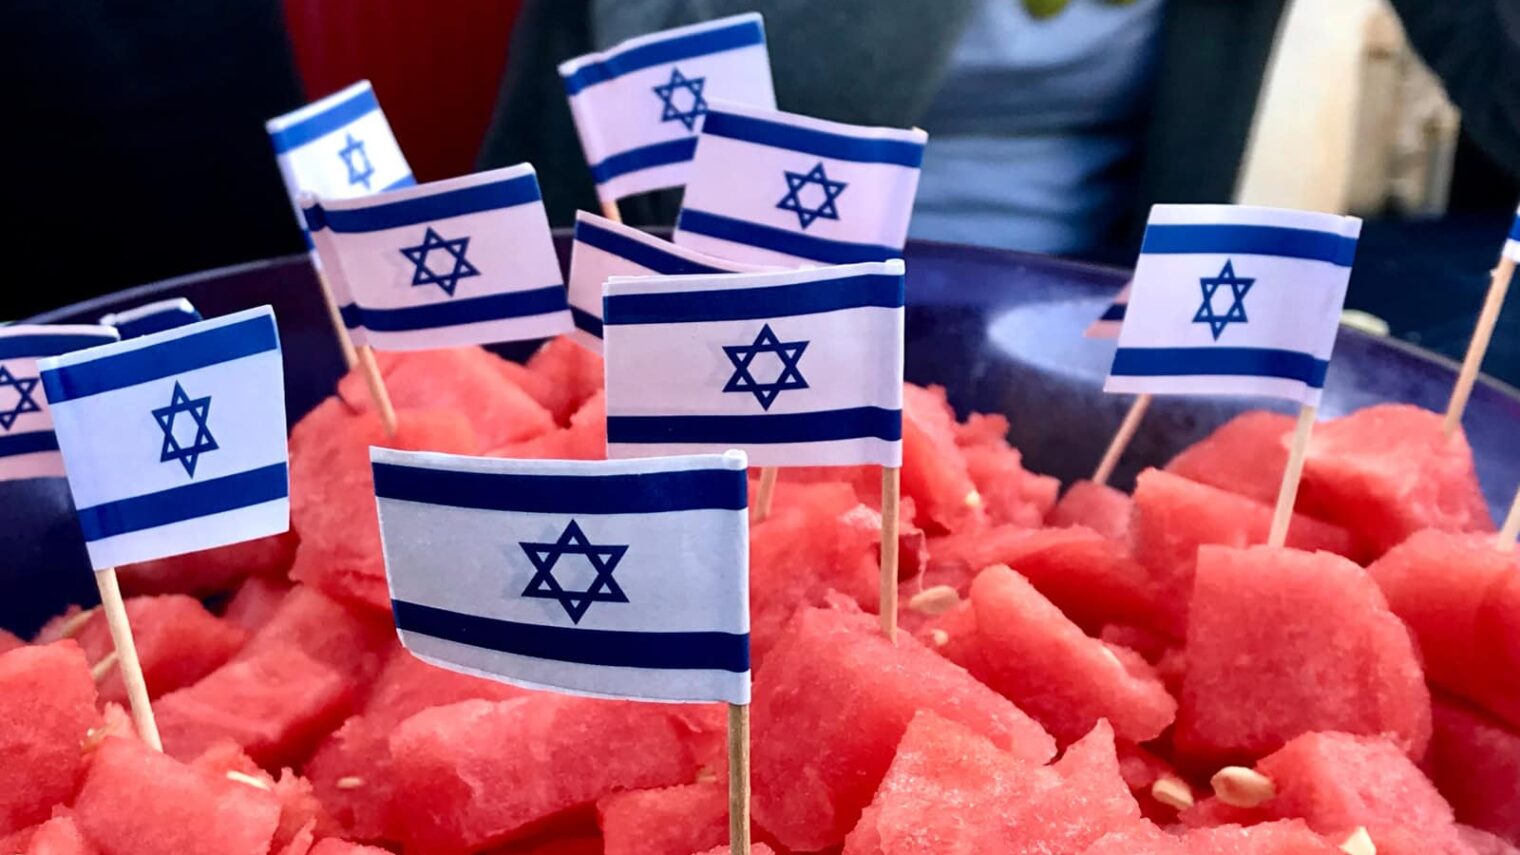 Israelis consumer 119,000 tons of watermelon per year. Photo by Shlomit Koslowe via Shutterstock.com